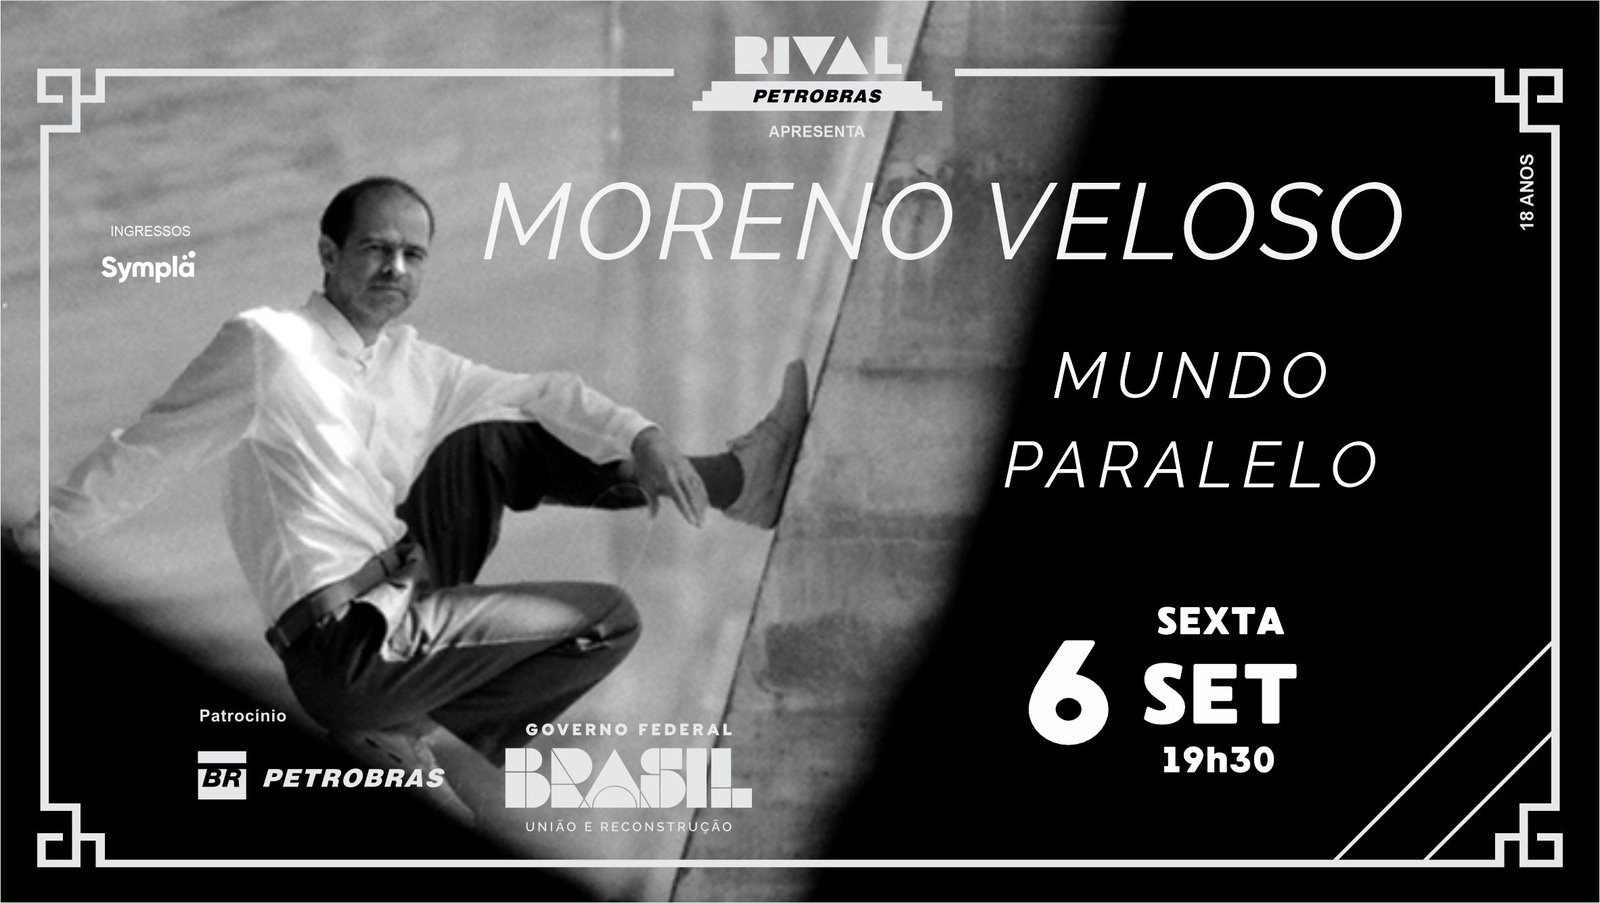 Moreno Veloso lança “Mundo paralelo”